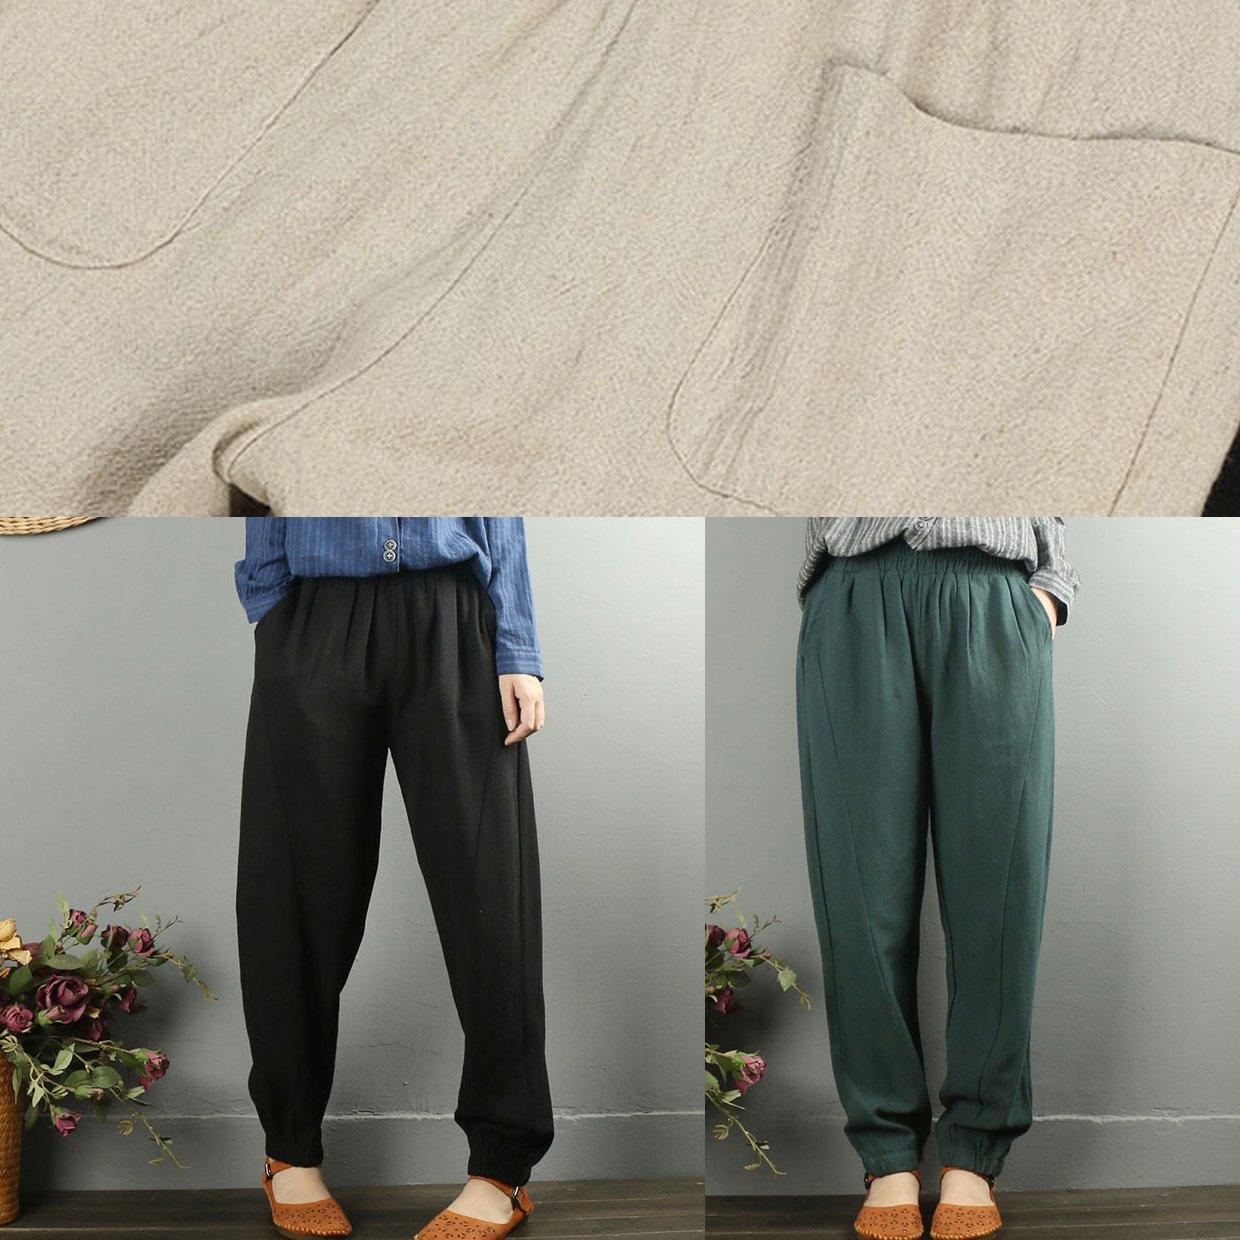 Ladies black loose large size beam pants cotton and linen elastic waist pants - Omychic